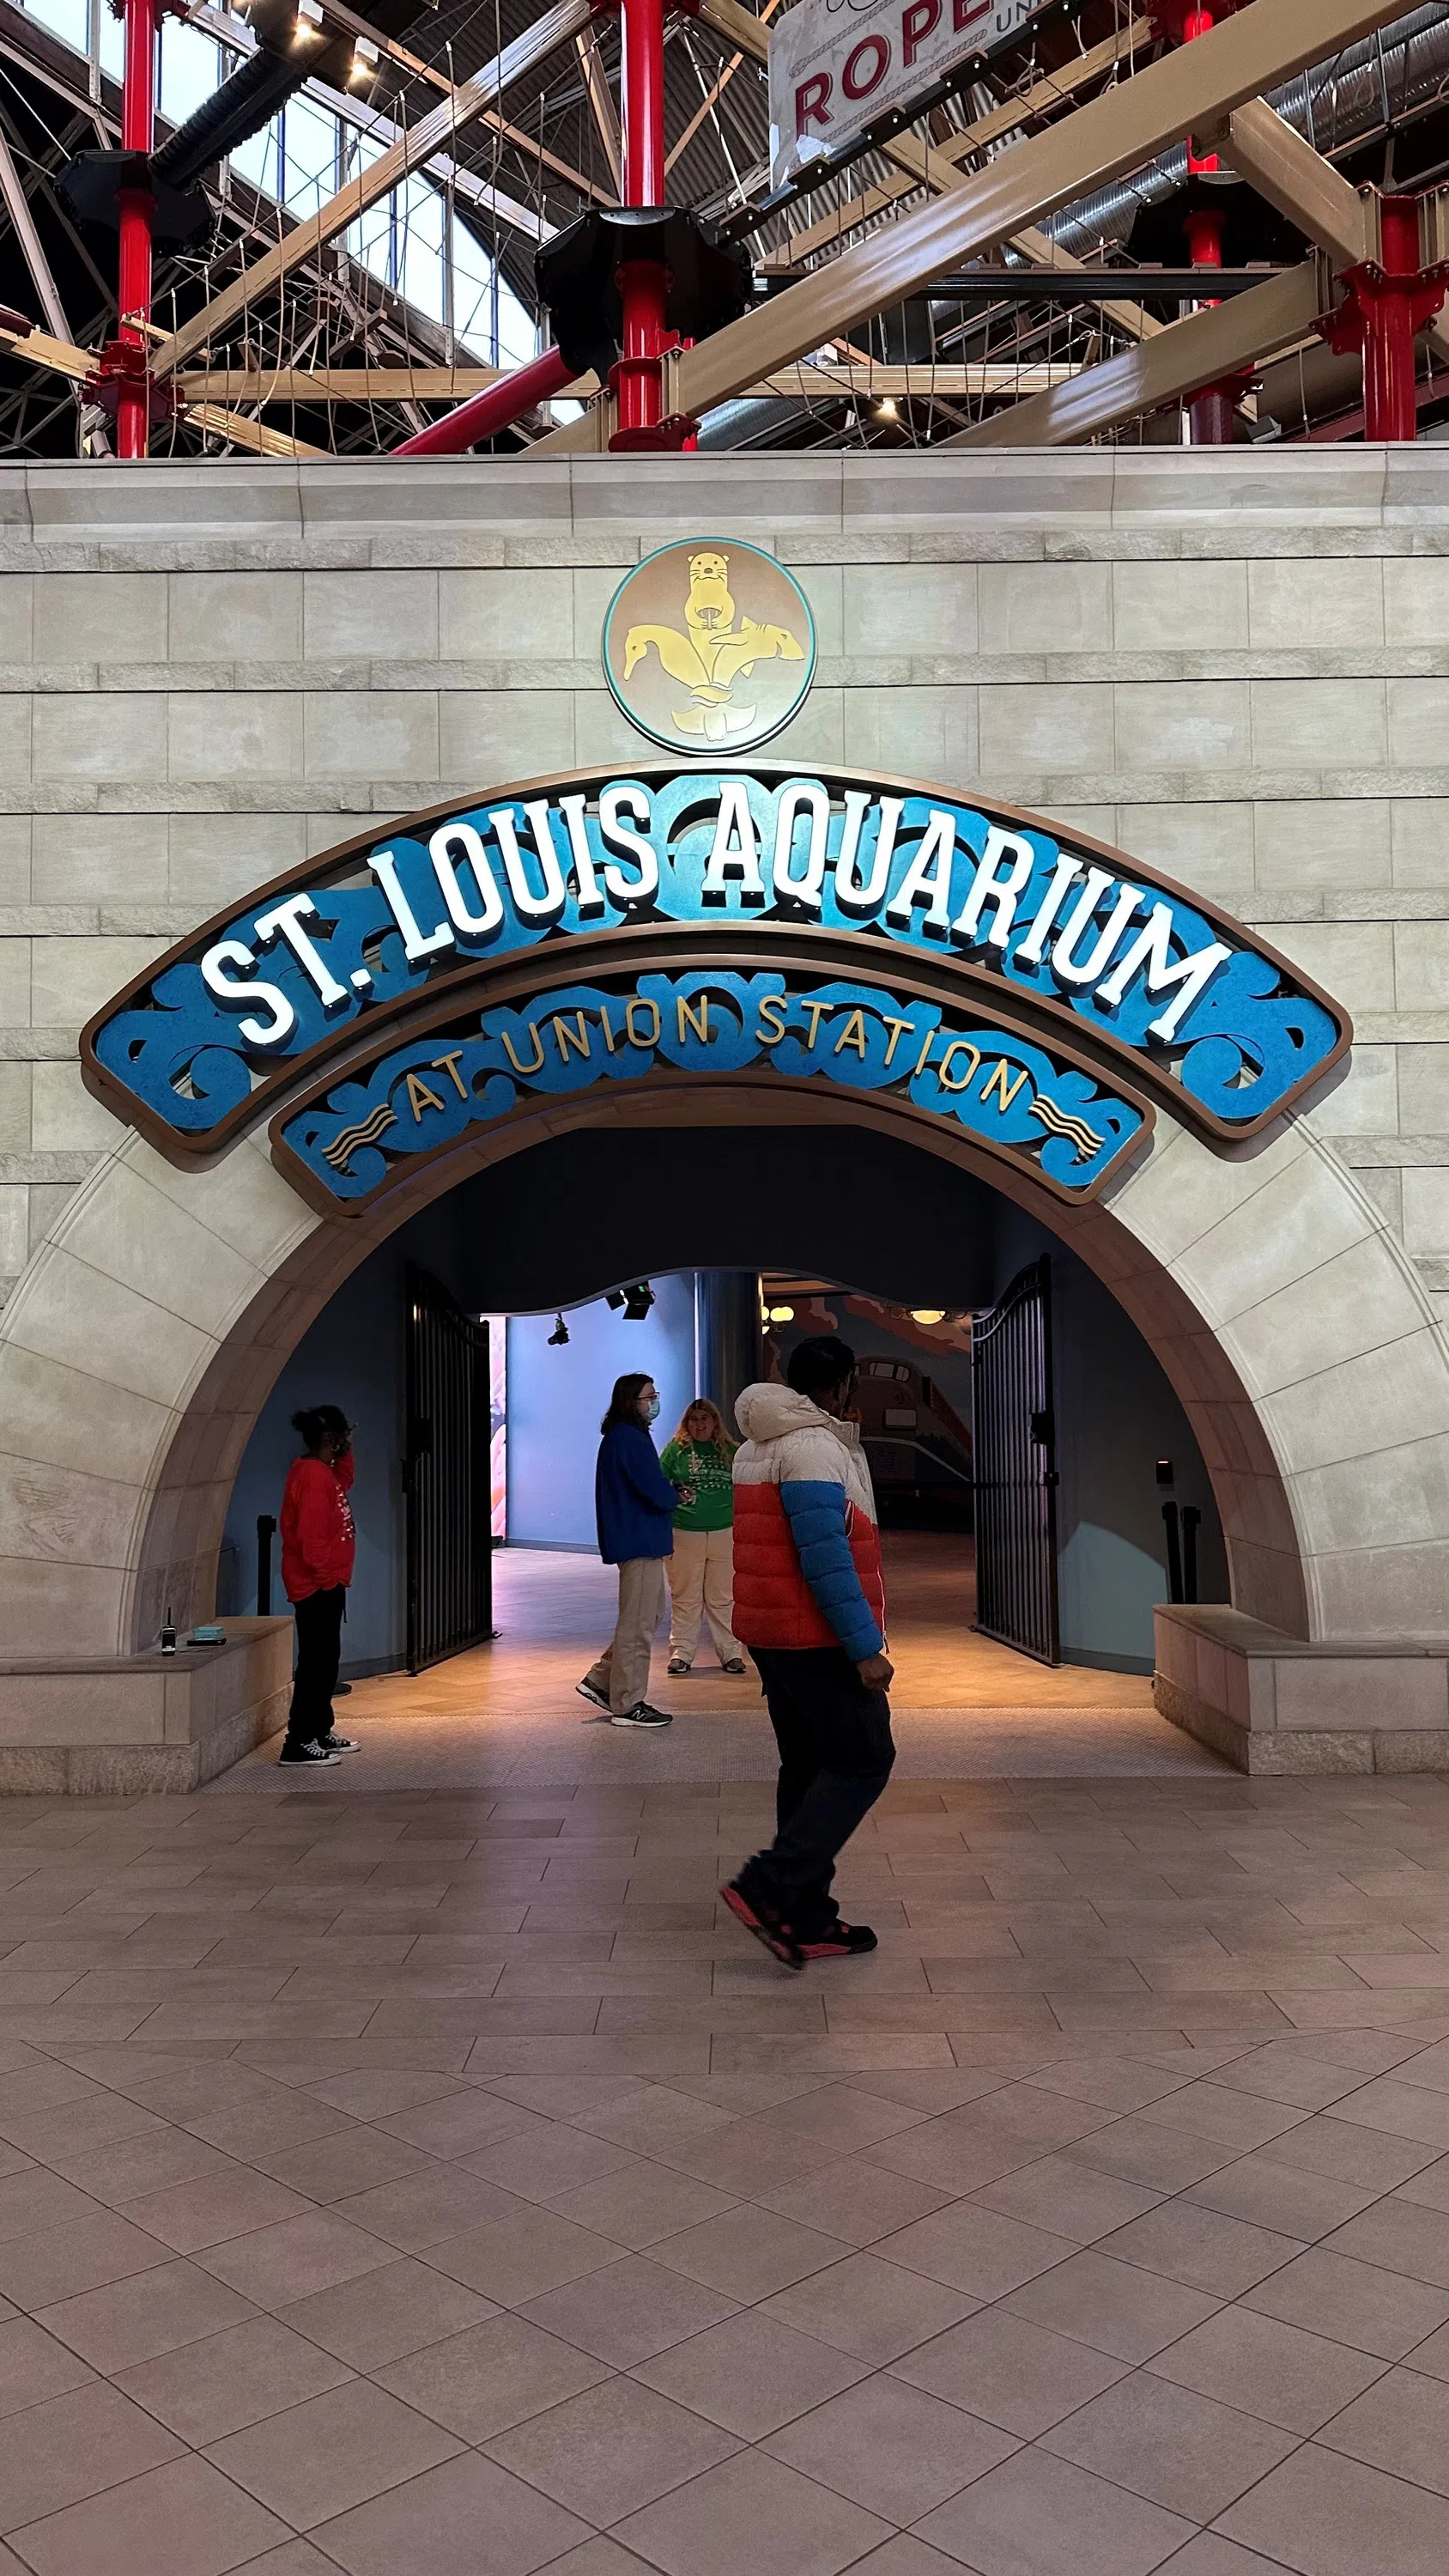 Entrance sign to the Aquarium